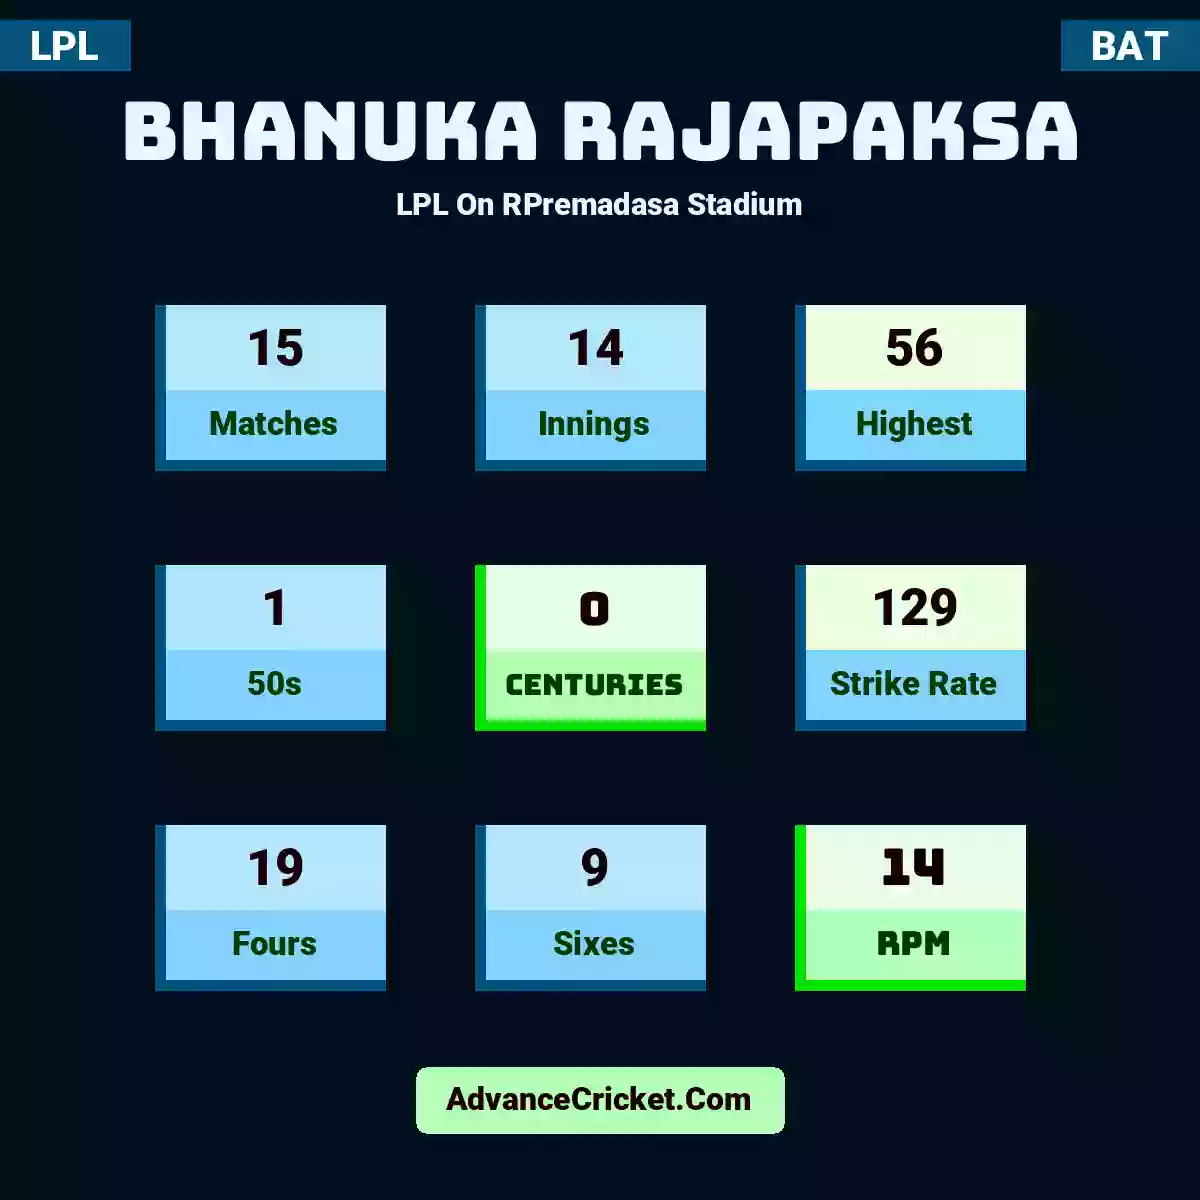 Bhanuka Rajapaksa LPL  On RPremadasa Stadium, Bhanuka Rajapaksa played 15 matches, scored 56 runs as highest, 1 half-centuries, and 0 centuries, with a strike rate of 129. B.Rajapaksa hit 19 fours and 9 sixes, with an RPM of 14.